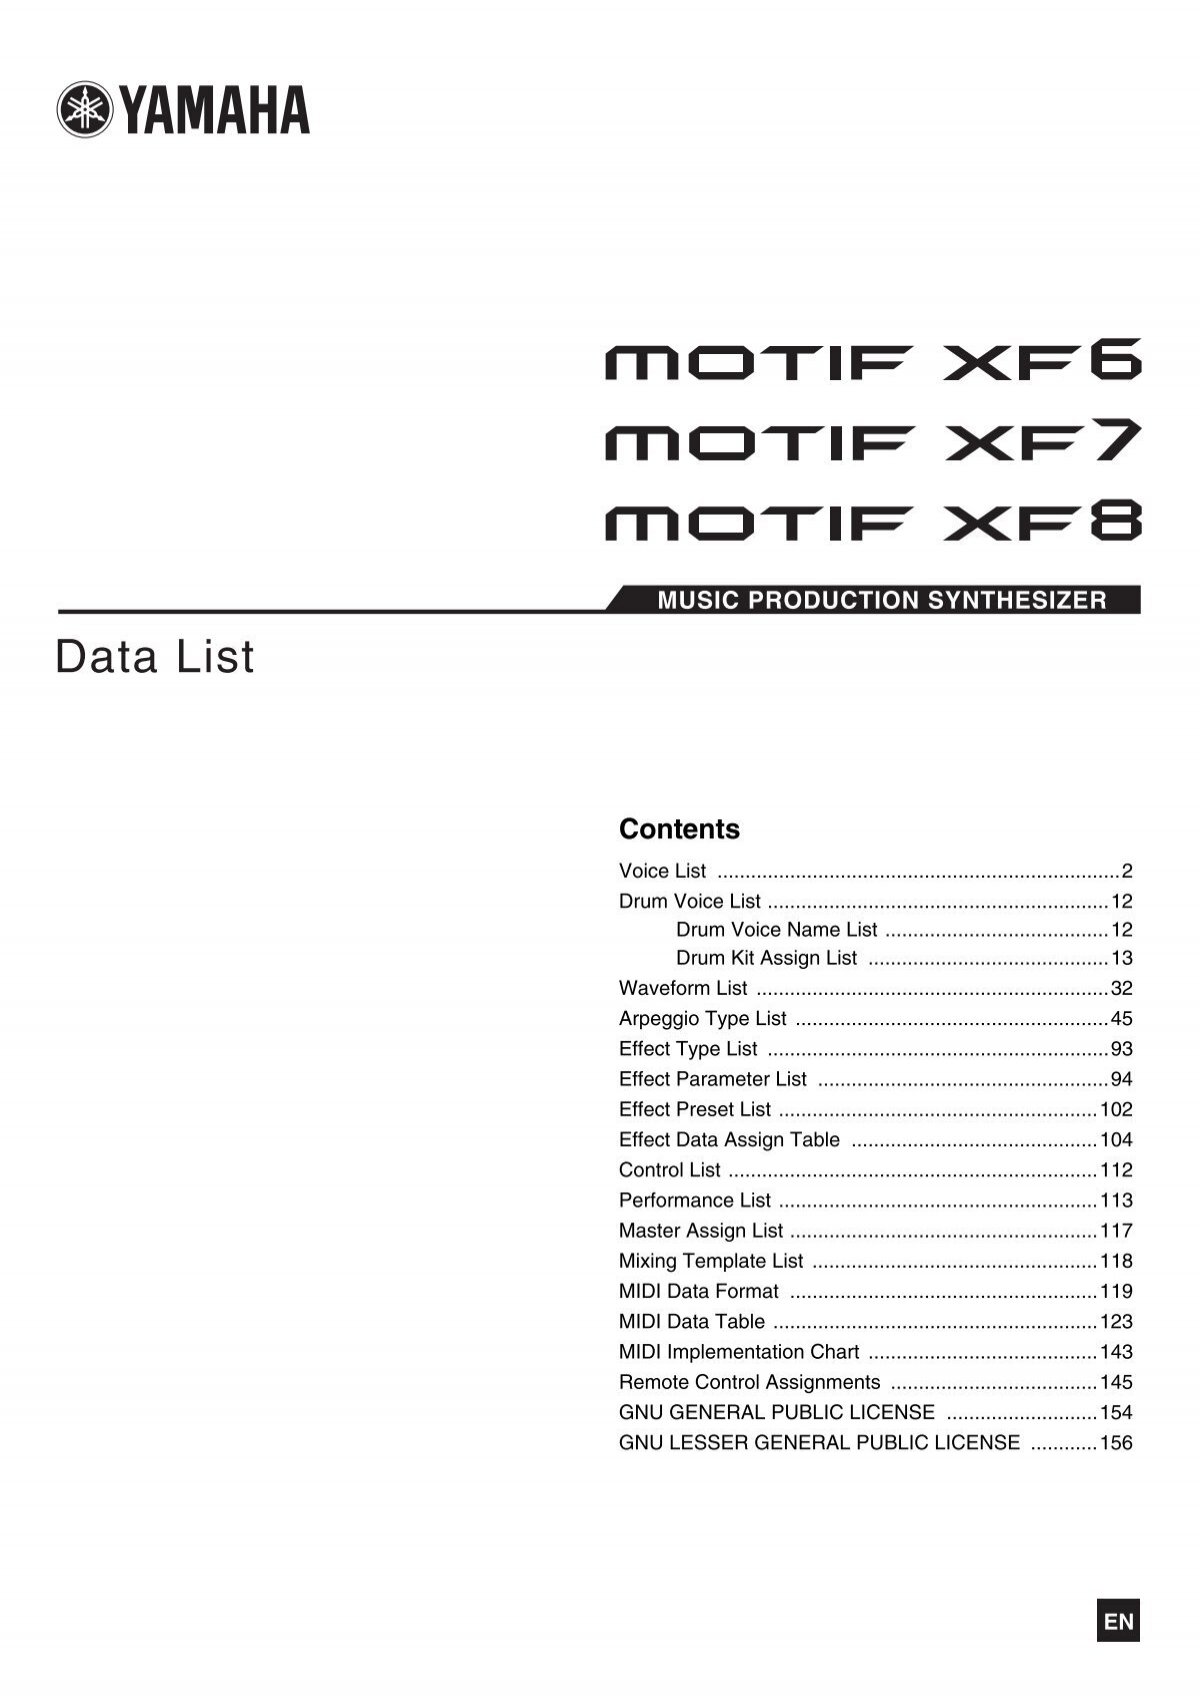 Download the Motif XF Dataâ€¦ - Motifator.com